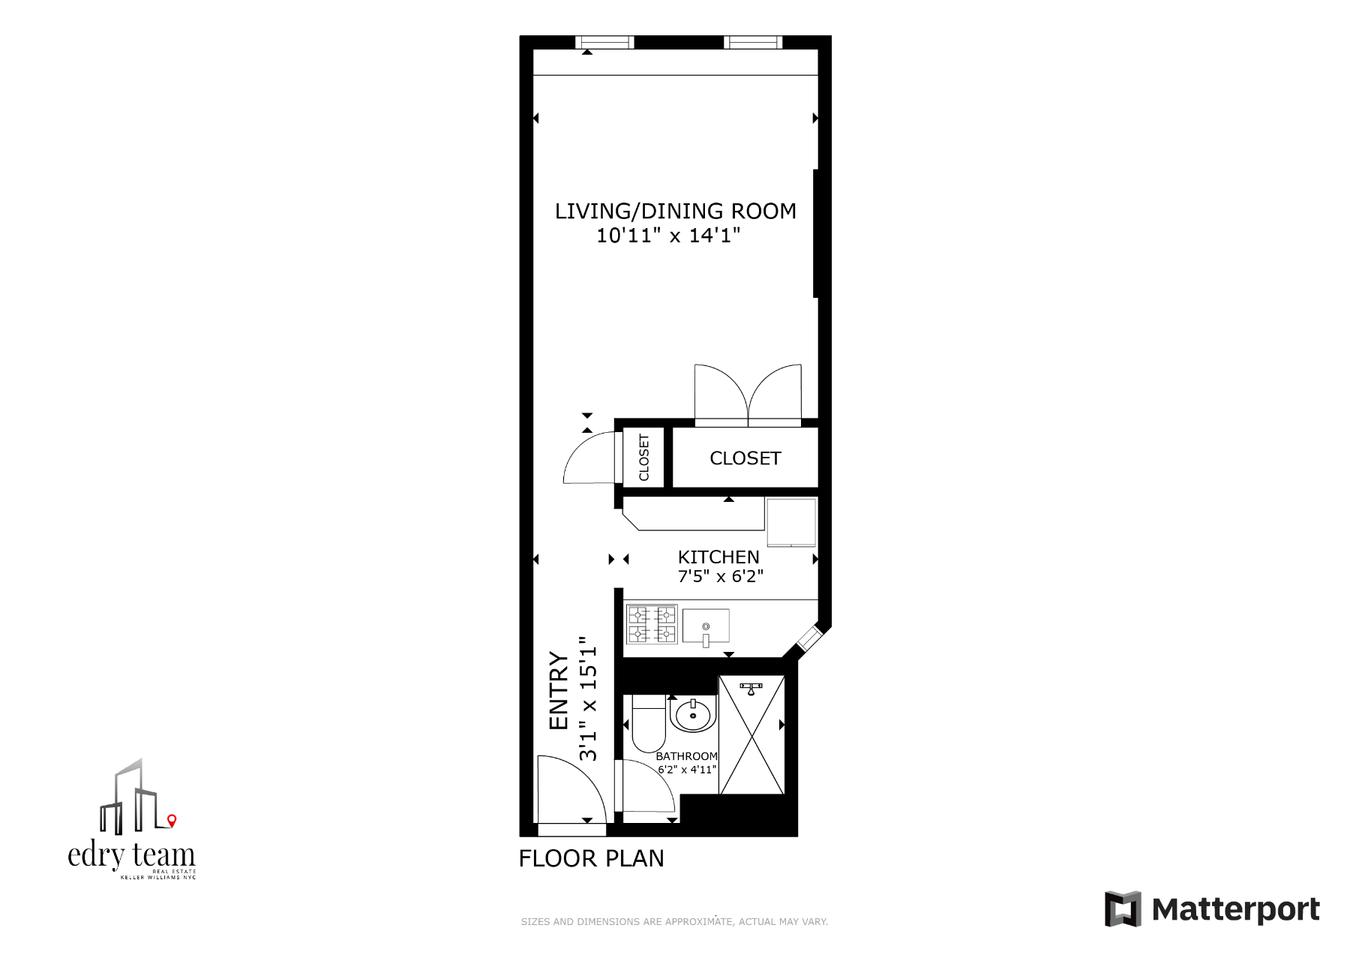 Floorplan for 238 East 84th Street, 2B